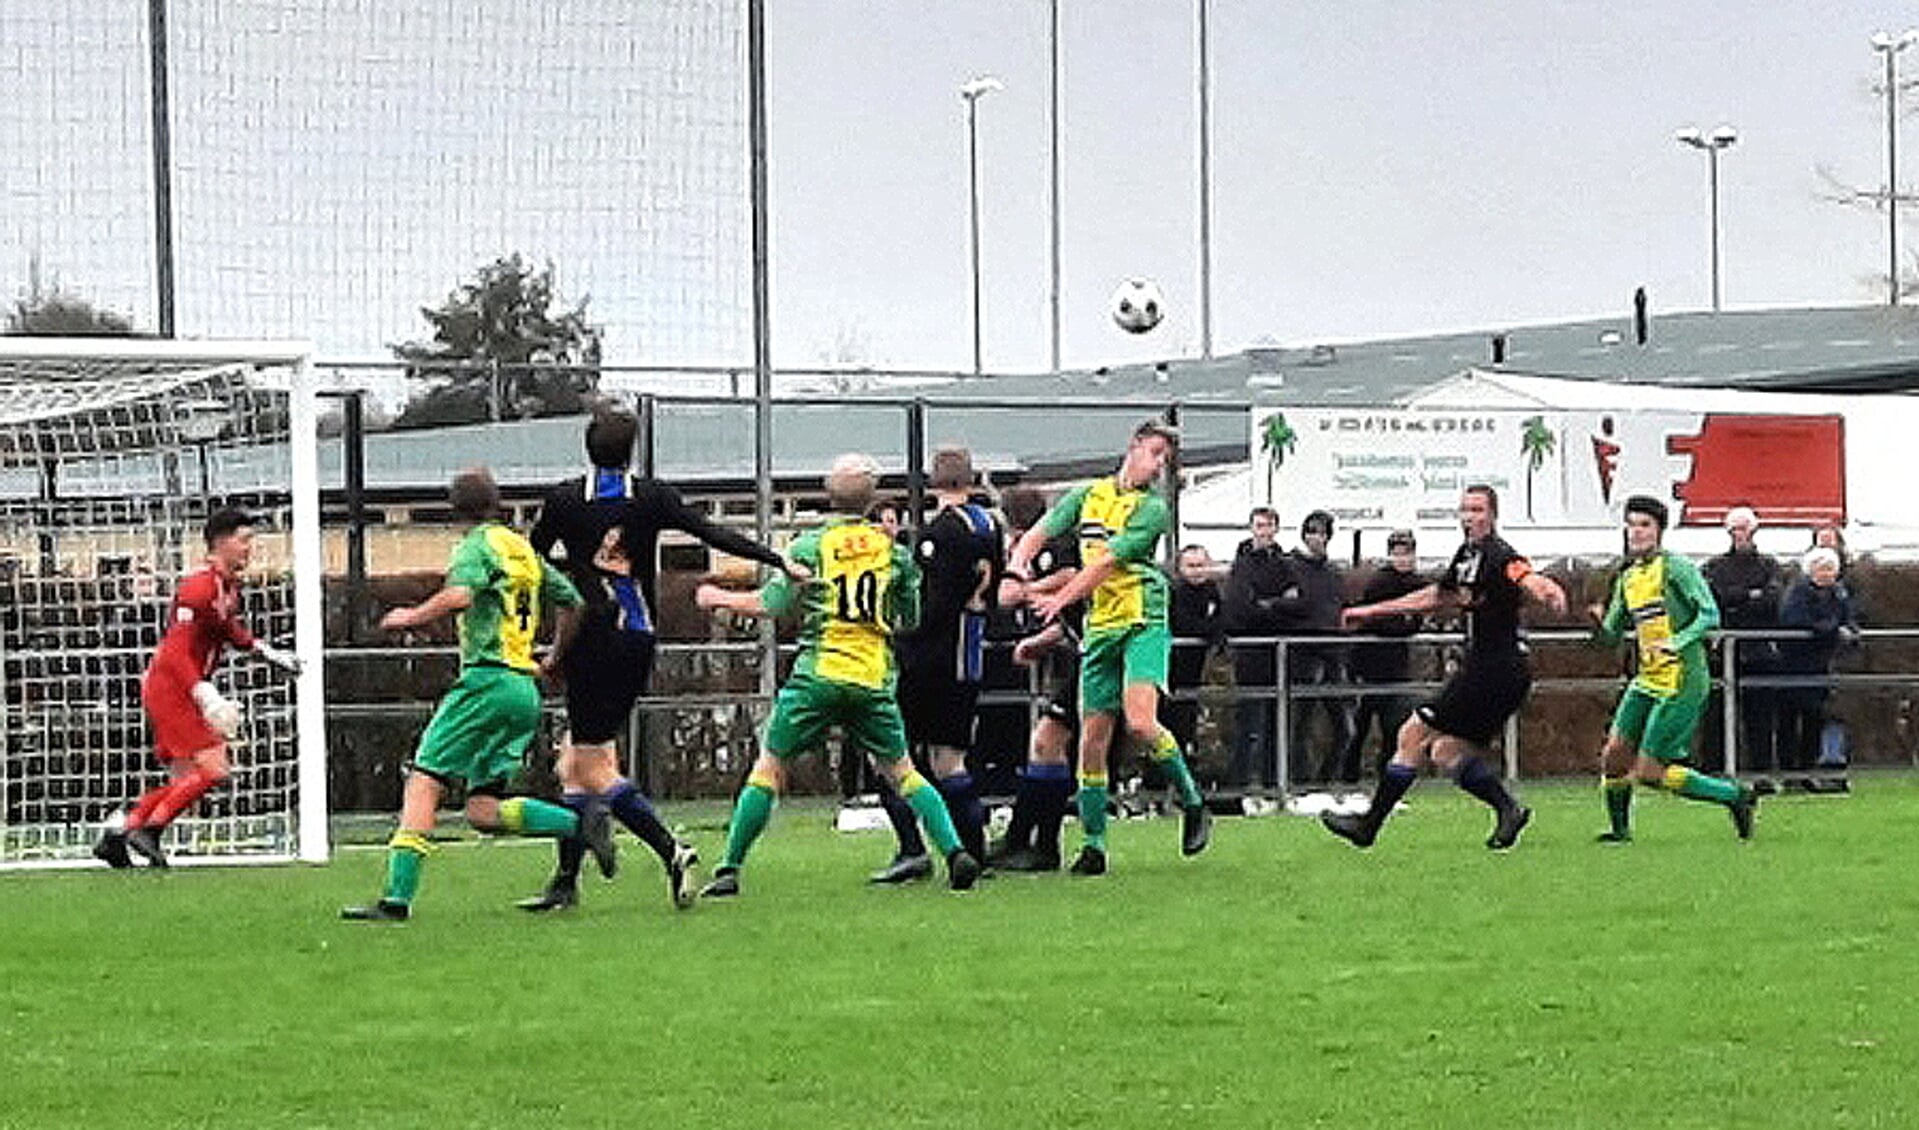 FIT Boys ging tegen FC Ommen strijdend ten onder (foto Maurits Beuling).